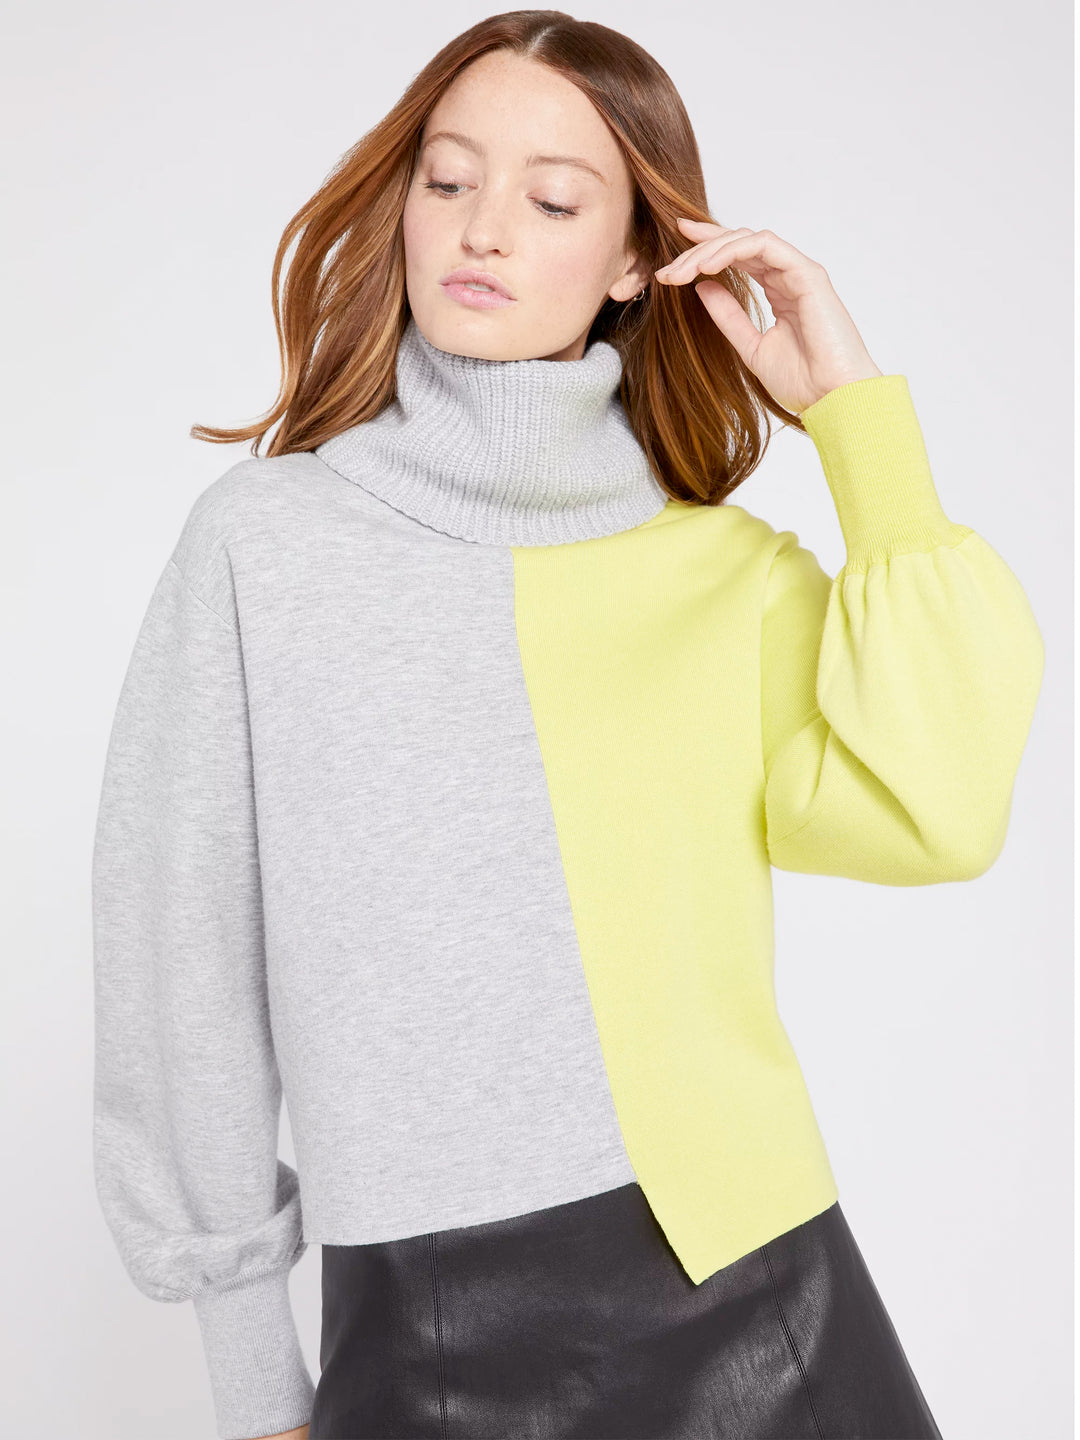 Alice + Olivia - Spencer Colorblock Turtleneck Sweater in Light Heather Grey/Sunny Lime